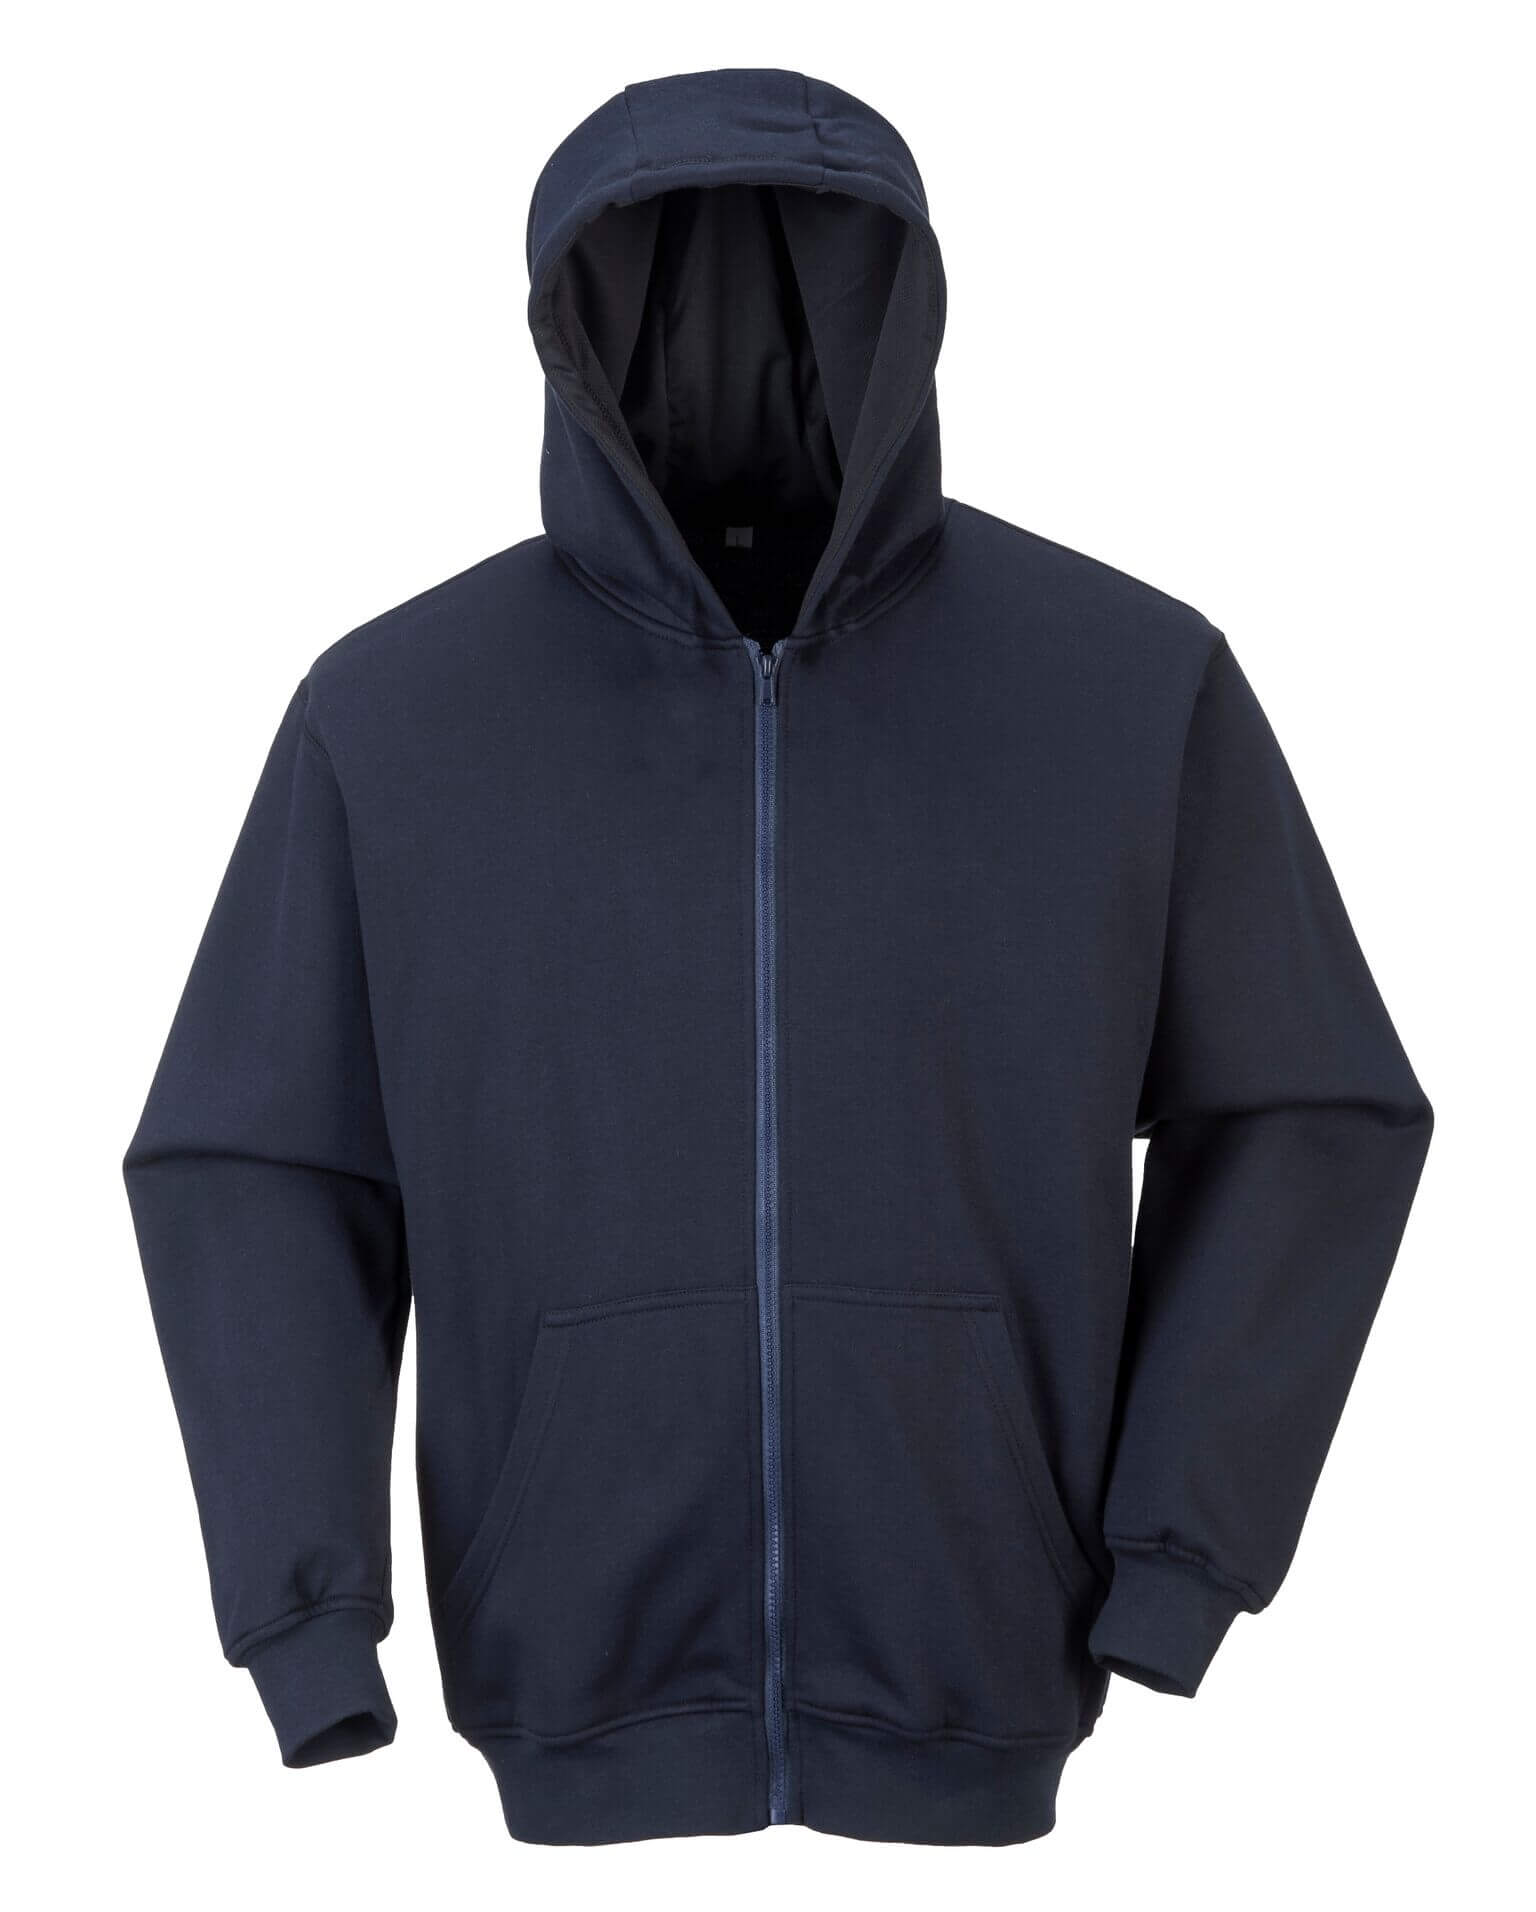 Flame Resistant Zipper Front Hooded Sweatshirt, PFR81